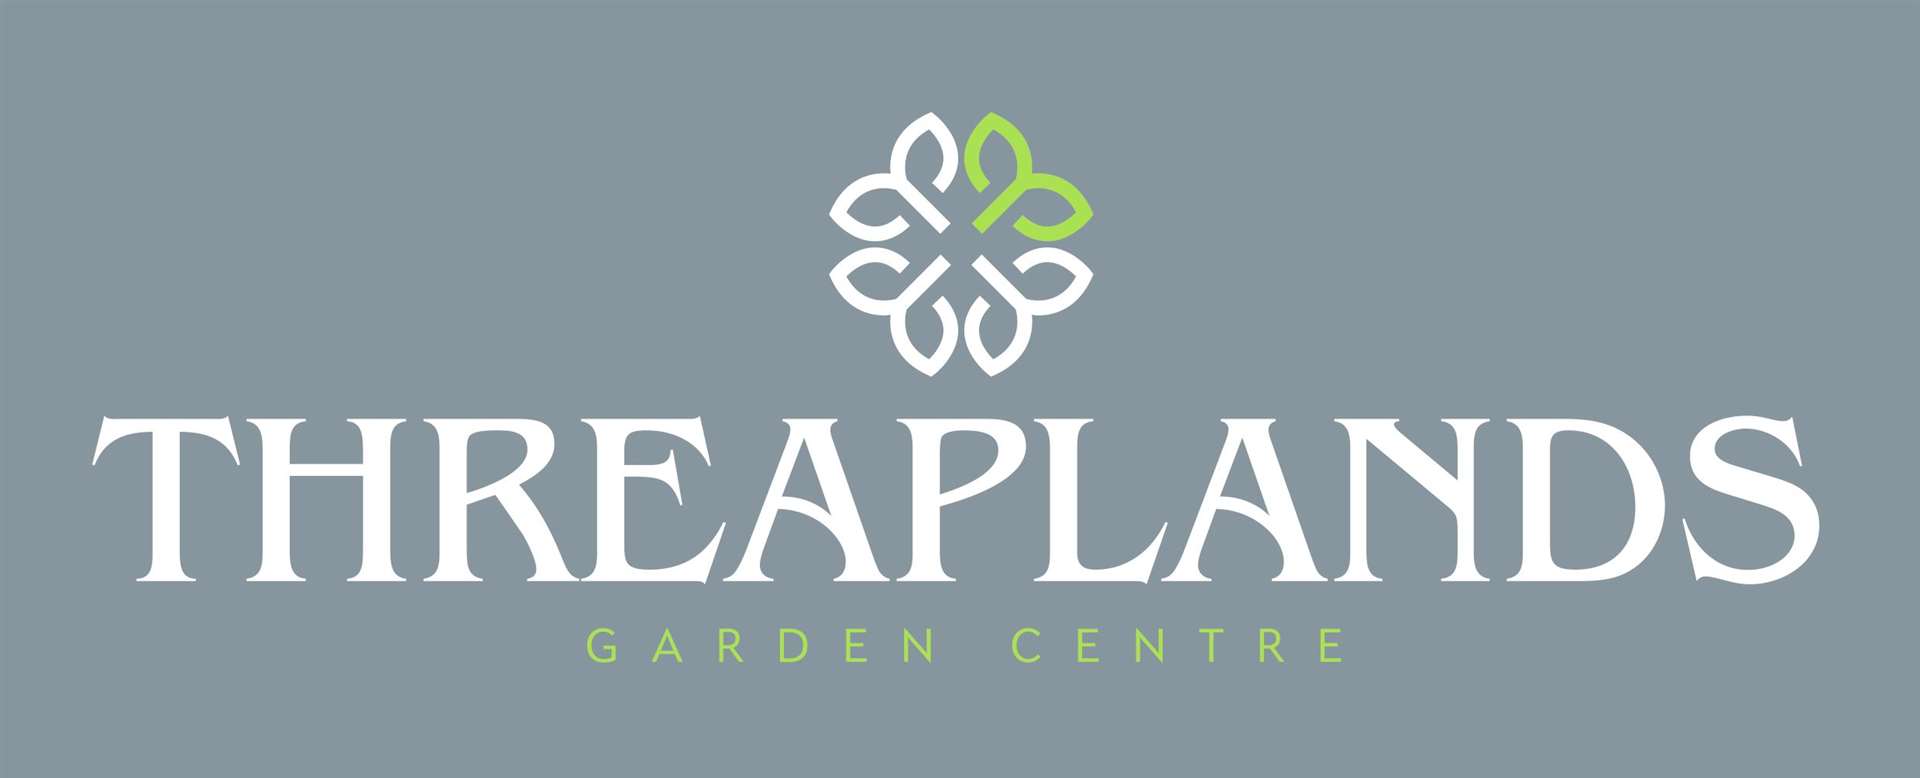 Your local garden centre Threaplands.